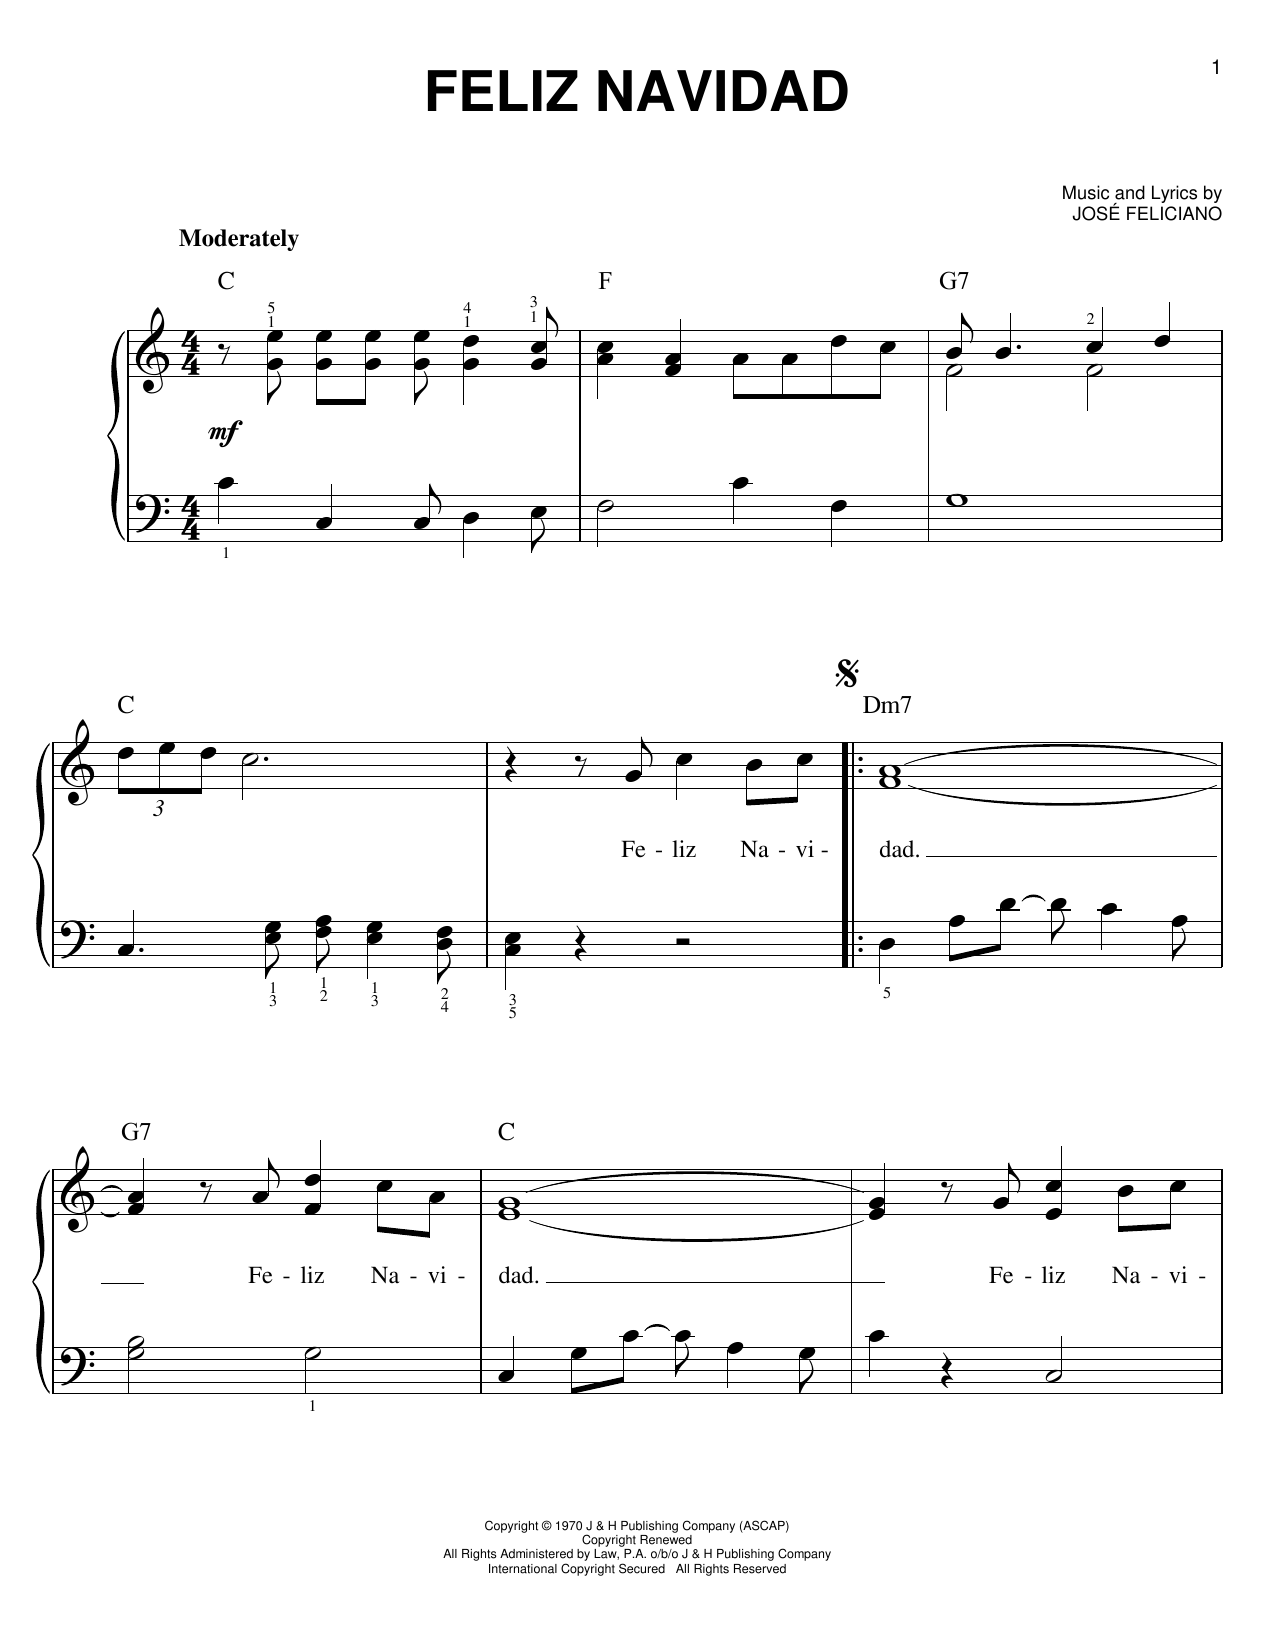 Jose Feliciano Feliz Navidad Sheet Music Notes & Chords for Easy Piano - Download or Print PDF